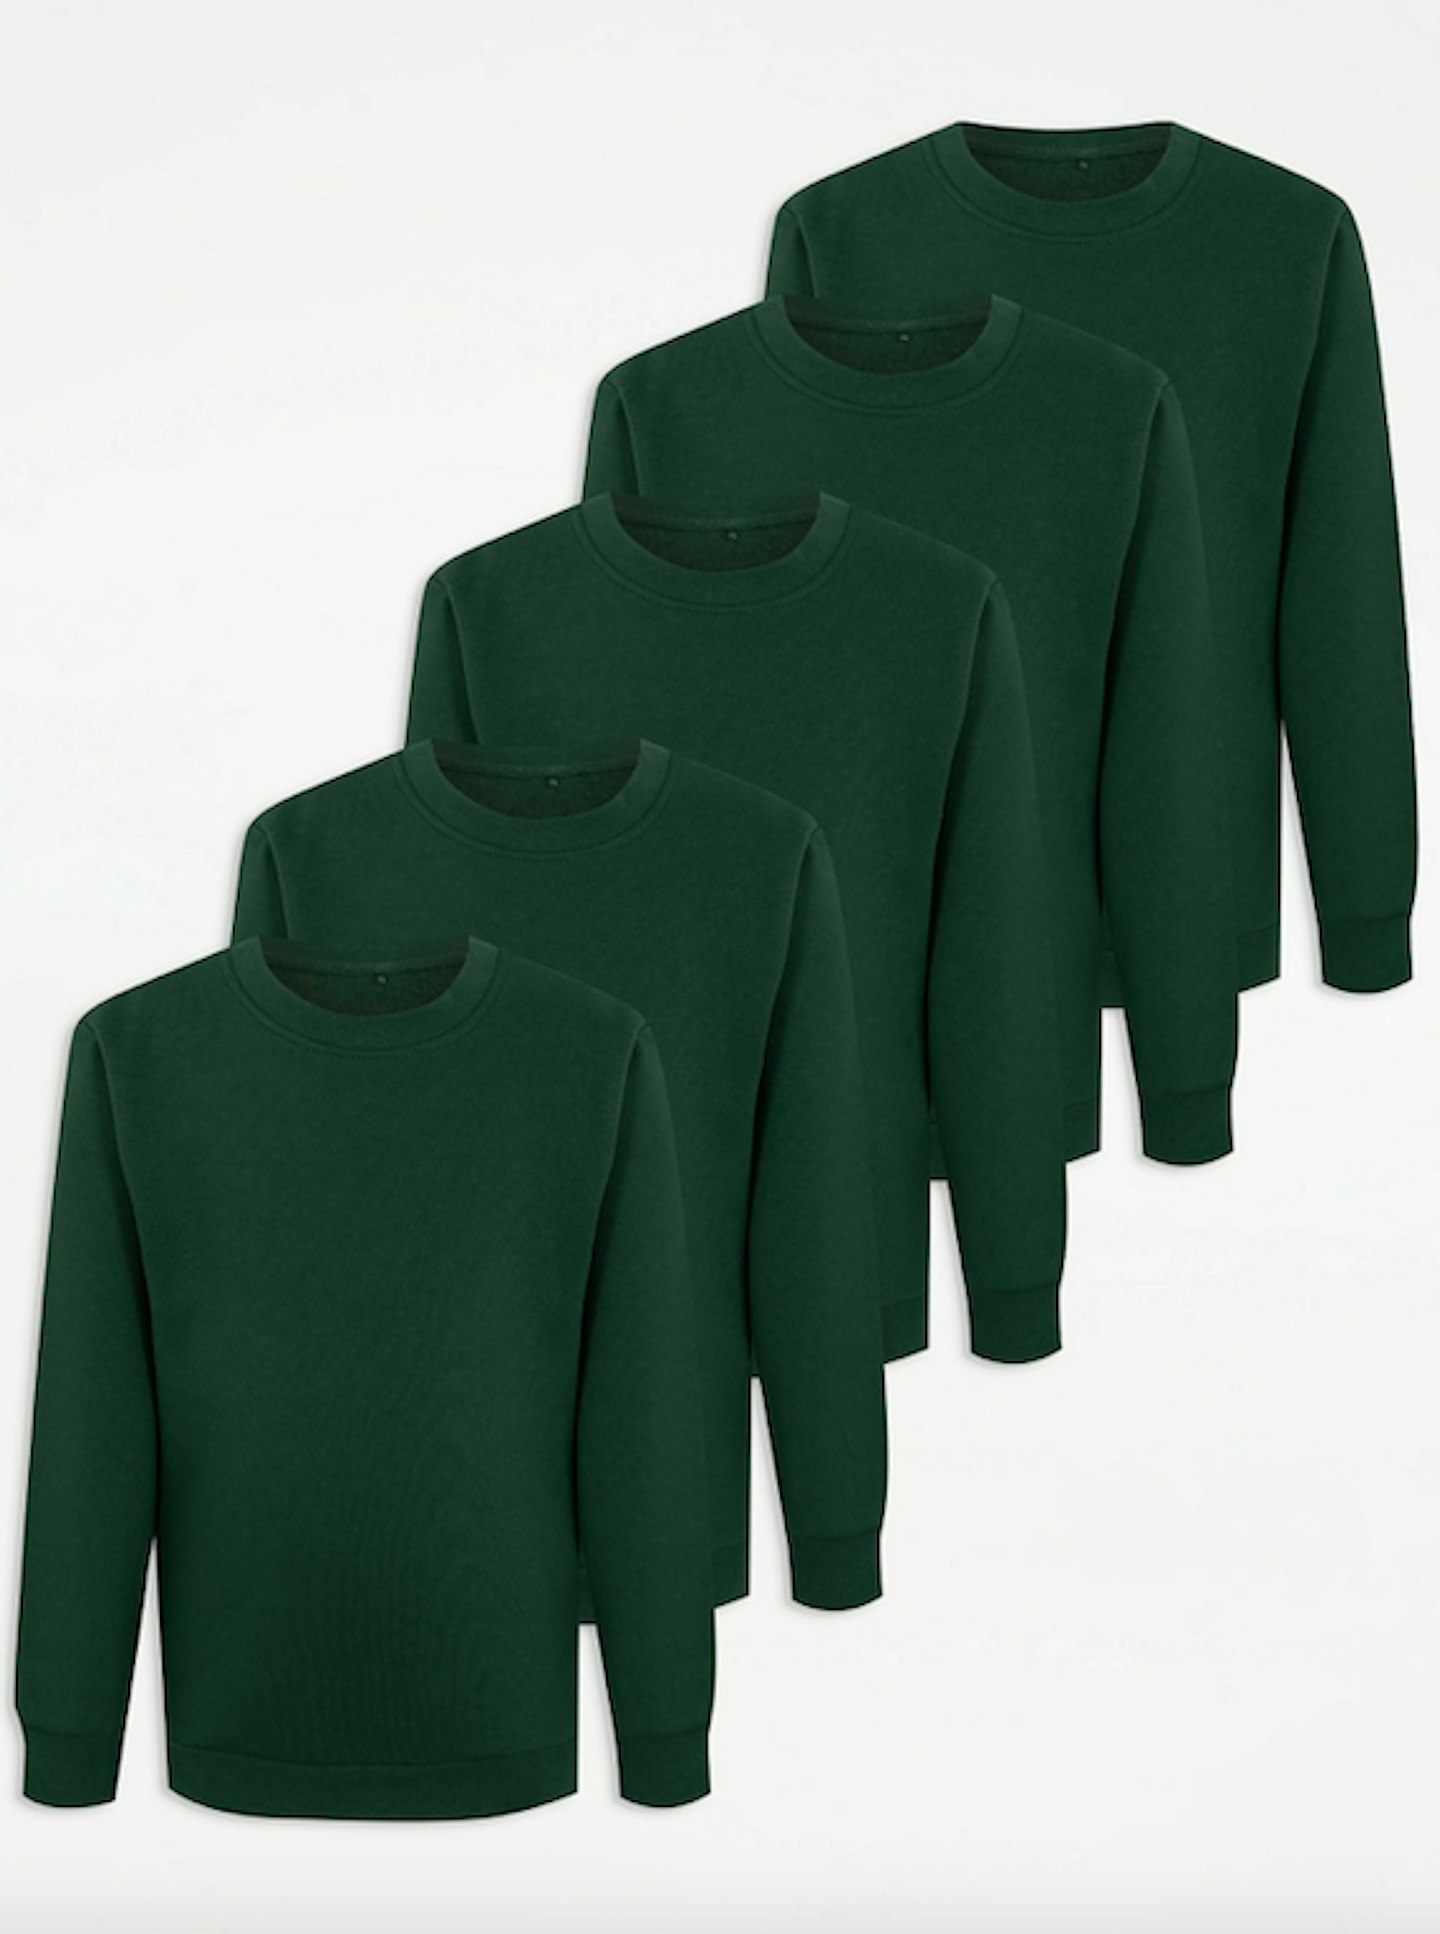 Bottle Green School Sweatshirt Pack, £12.50